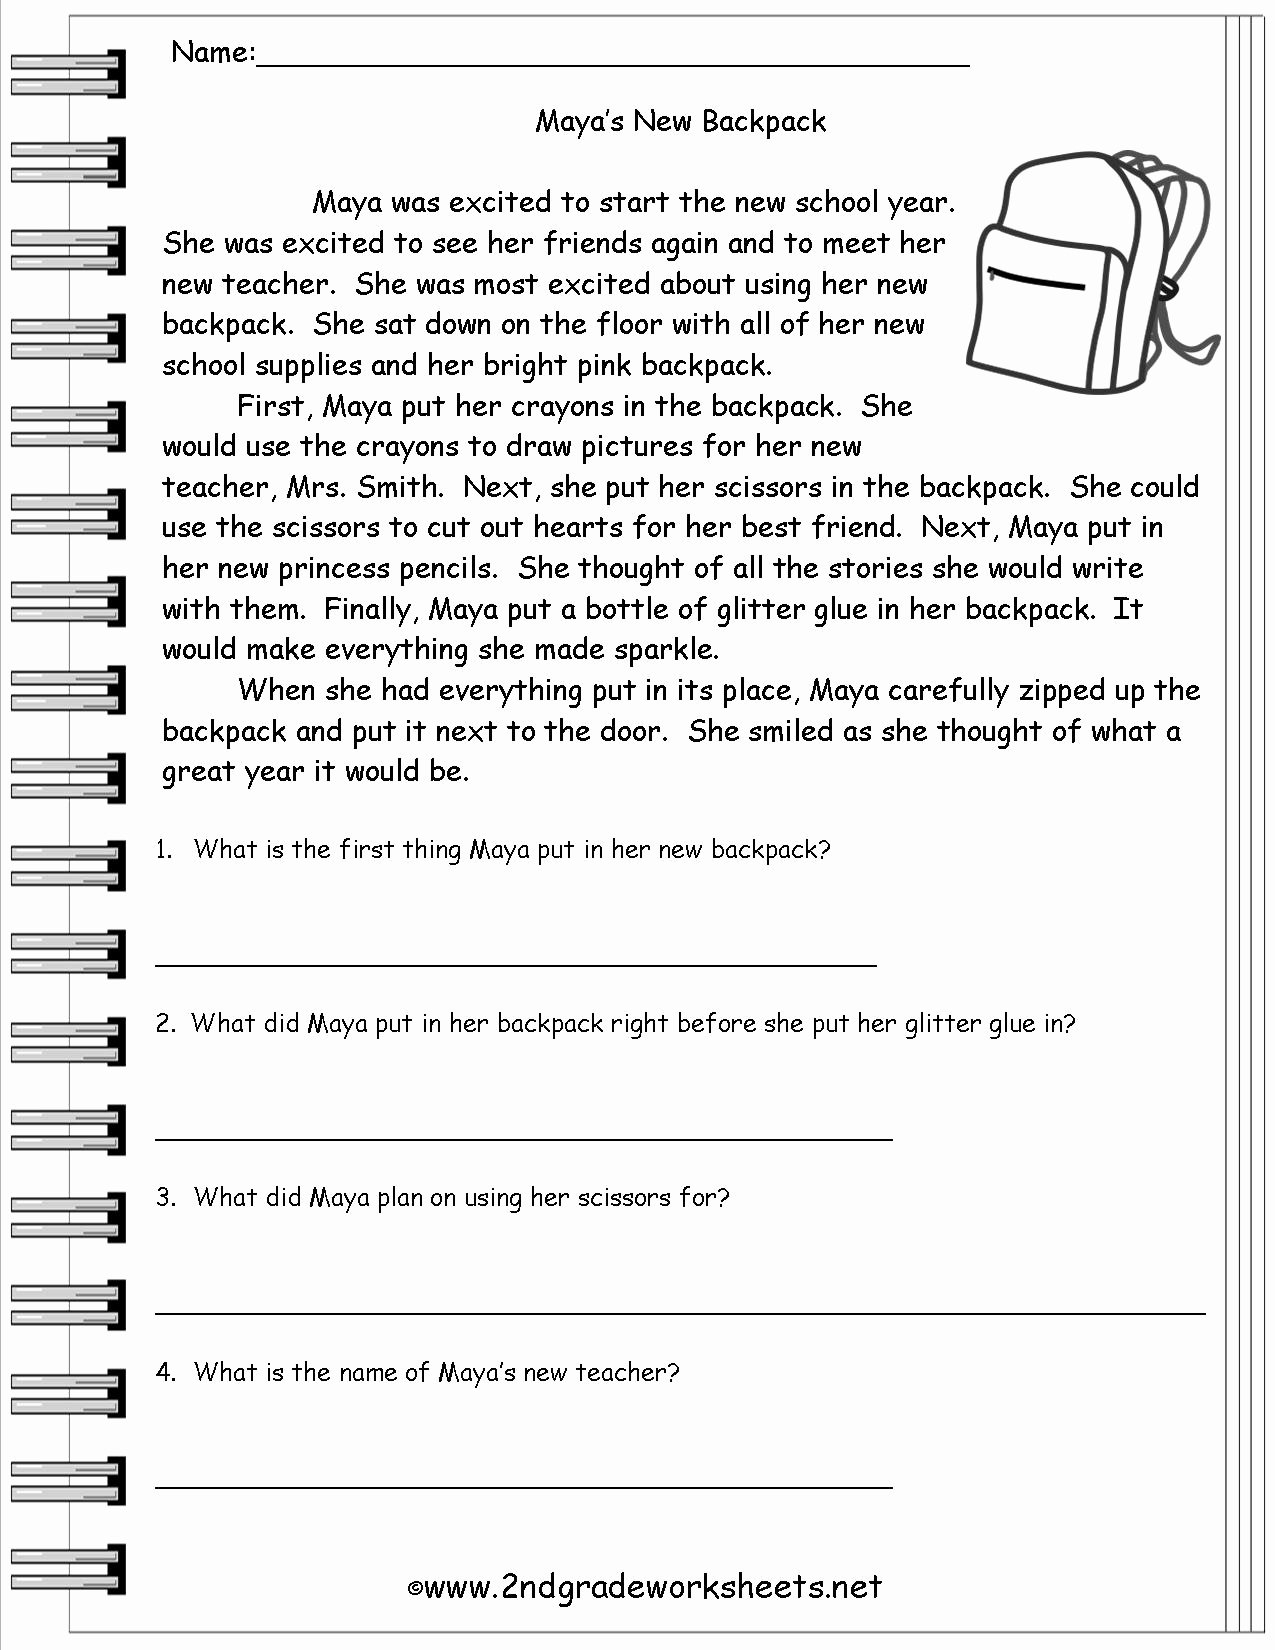 20 Free 4Th Grade Reading Comprehension Worksheets Multiple Choice In Free 4Th Grade Reading Comprehension Worksheets